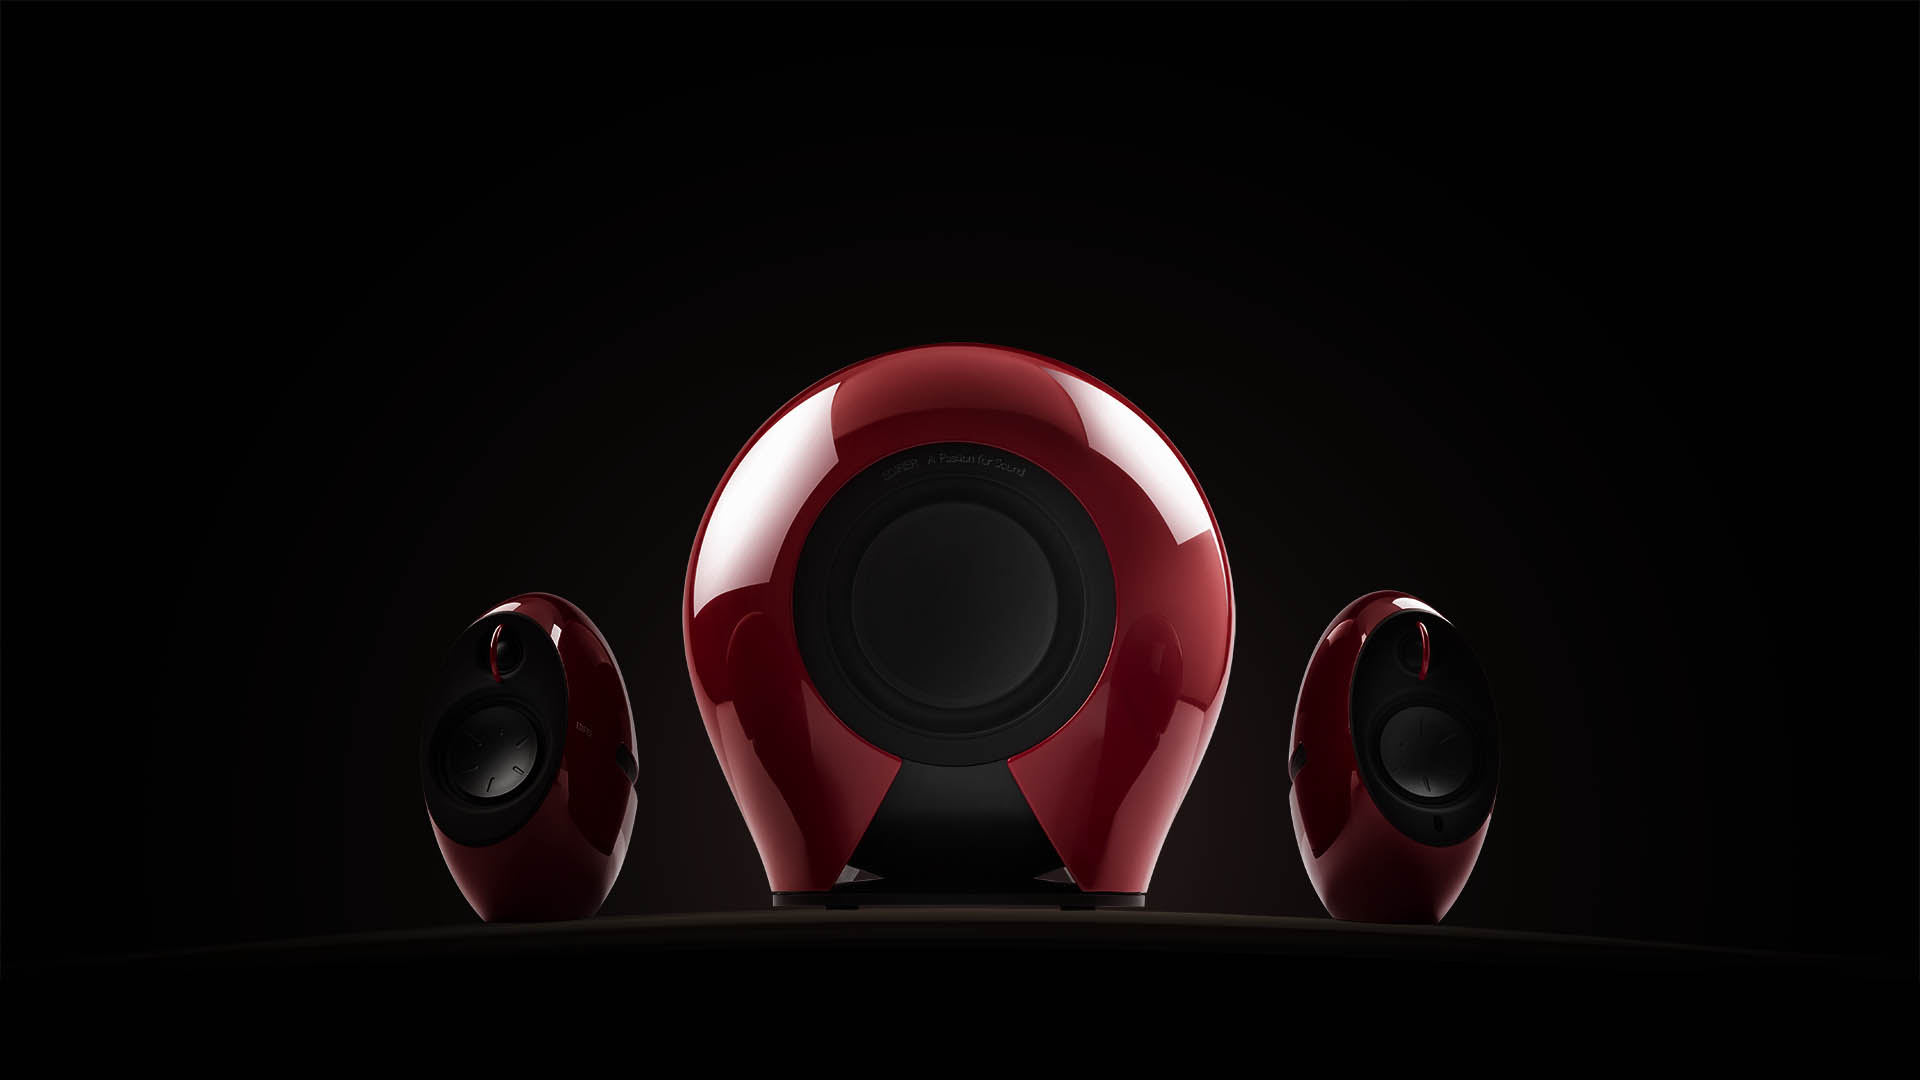 Luna E 2.1 audio system named 2015 CES Innovation Awards honoree